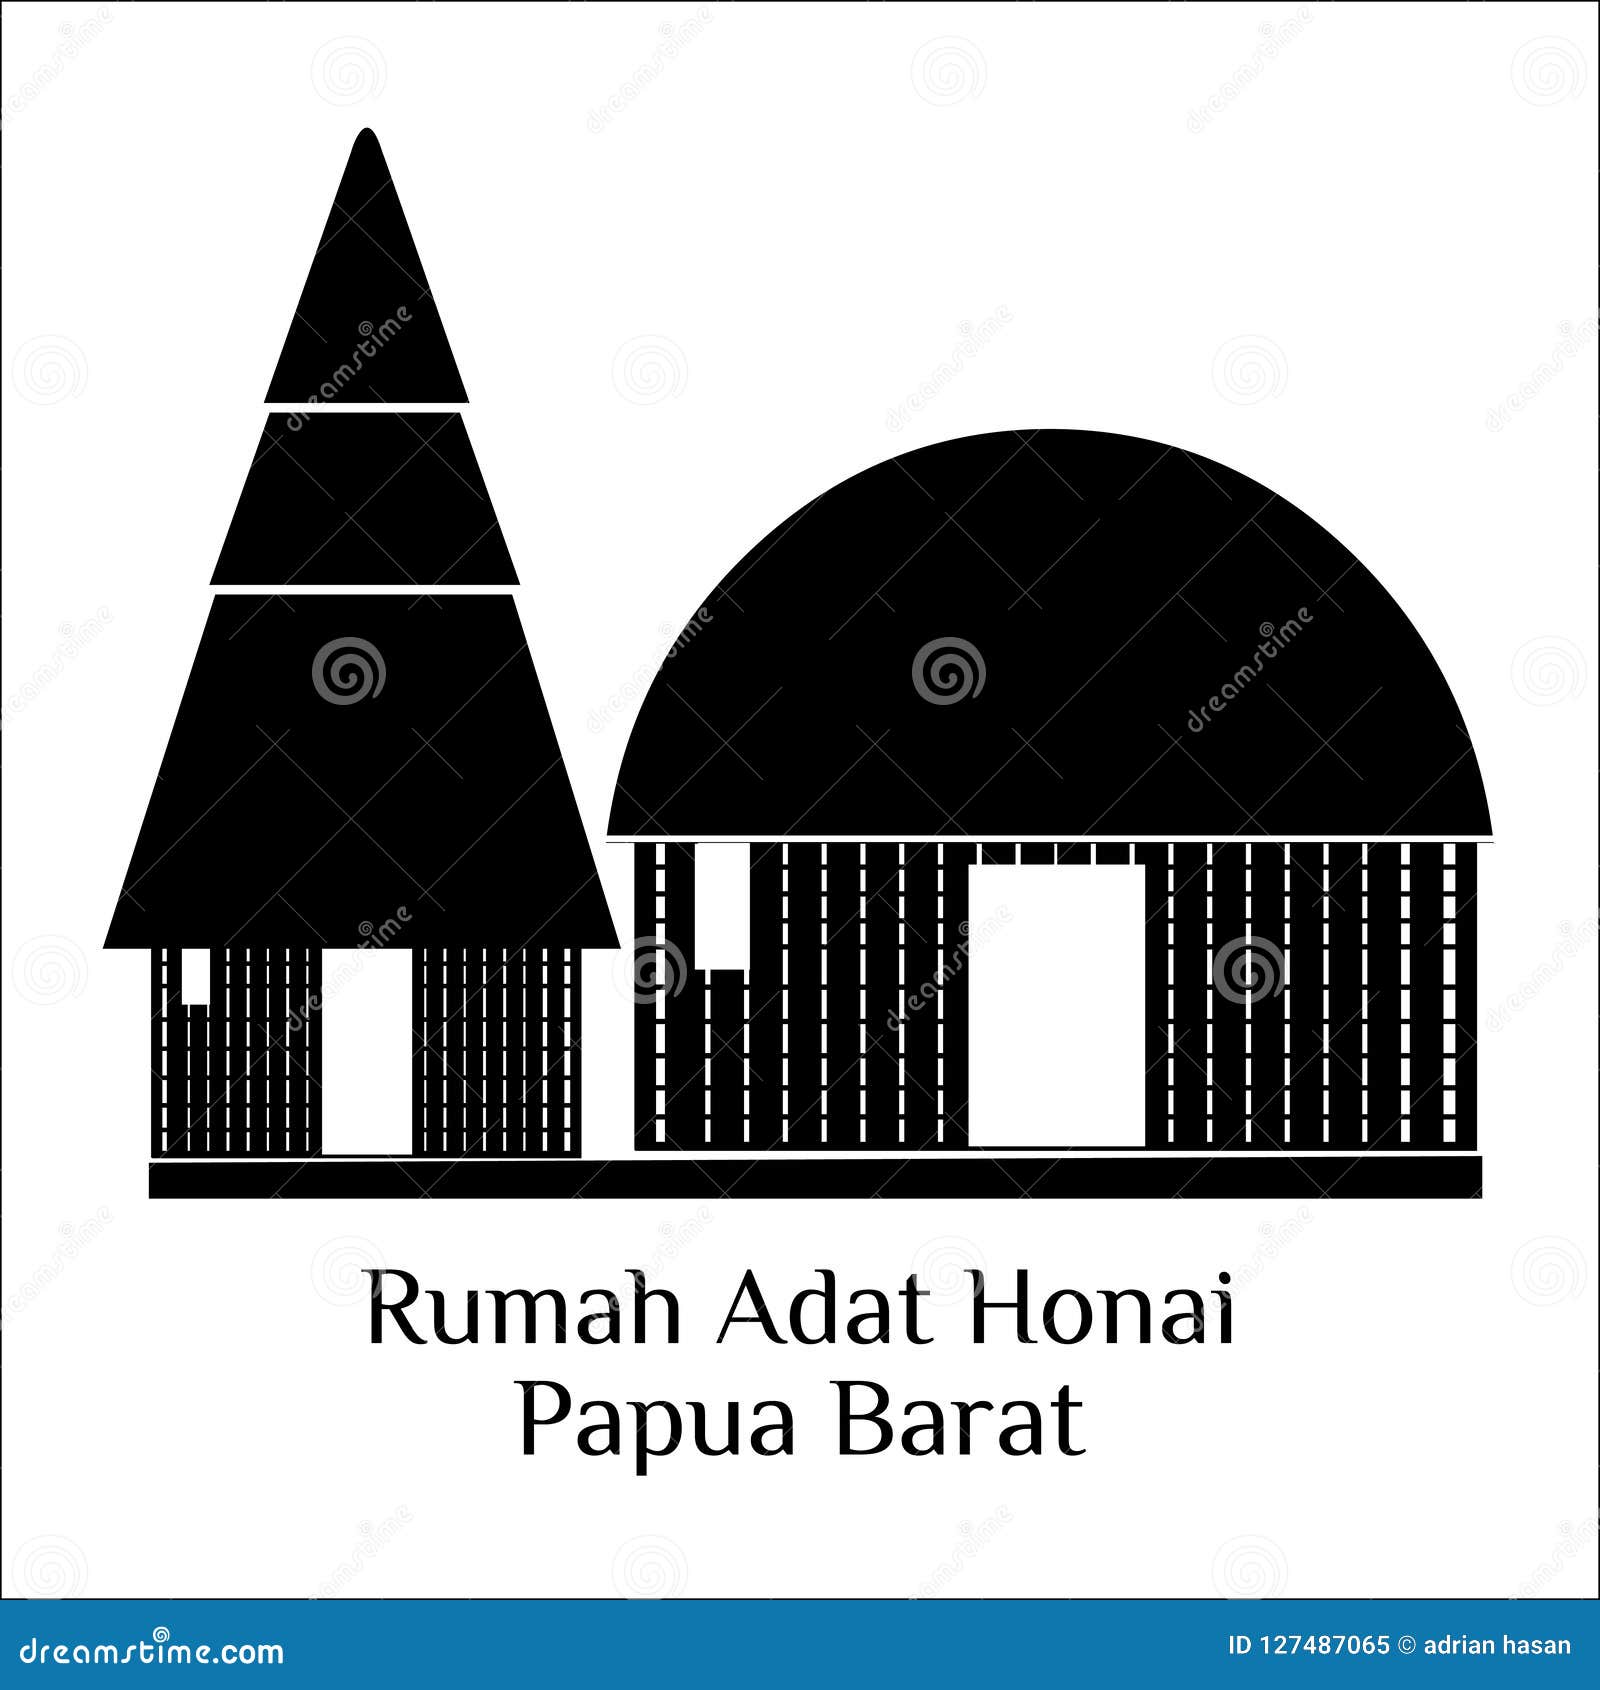 Rumah Adat Honai Papua Barat Stock Illustration Illustration Of Honai Barat 127487065